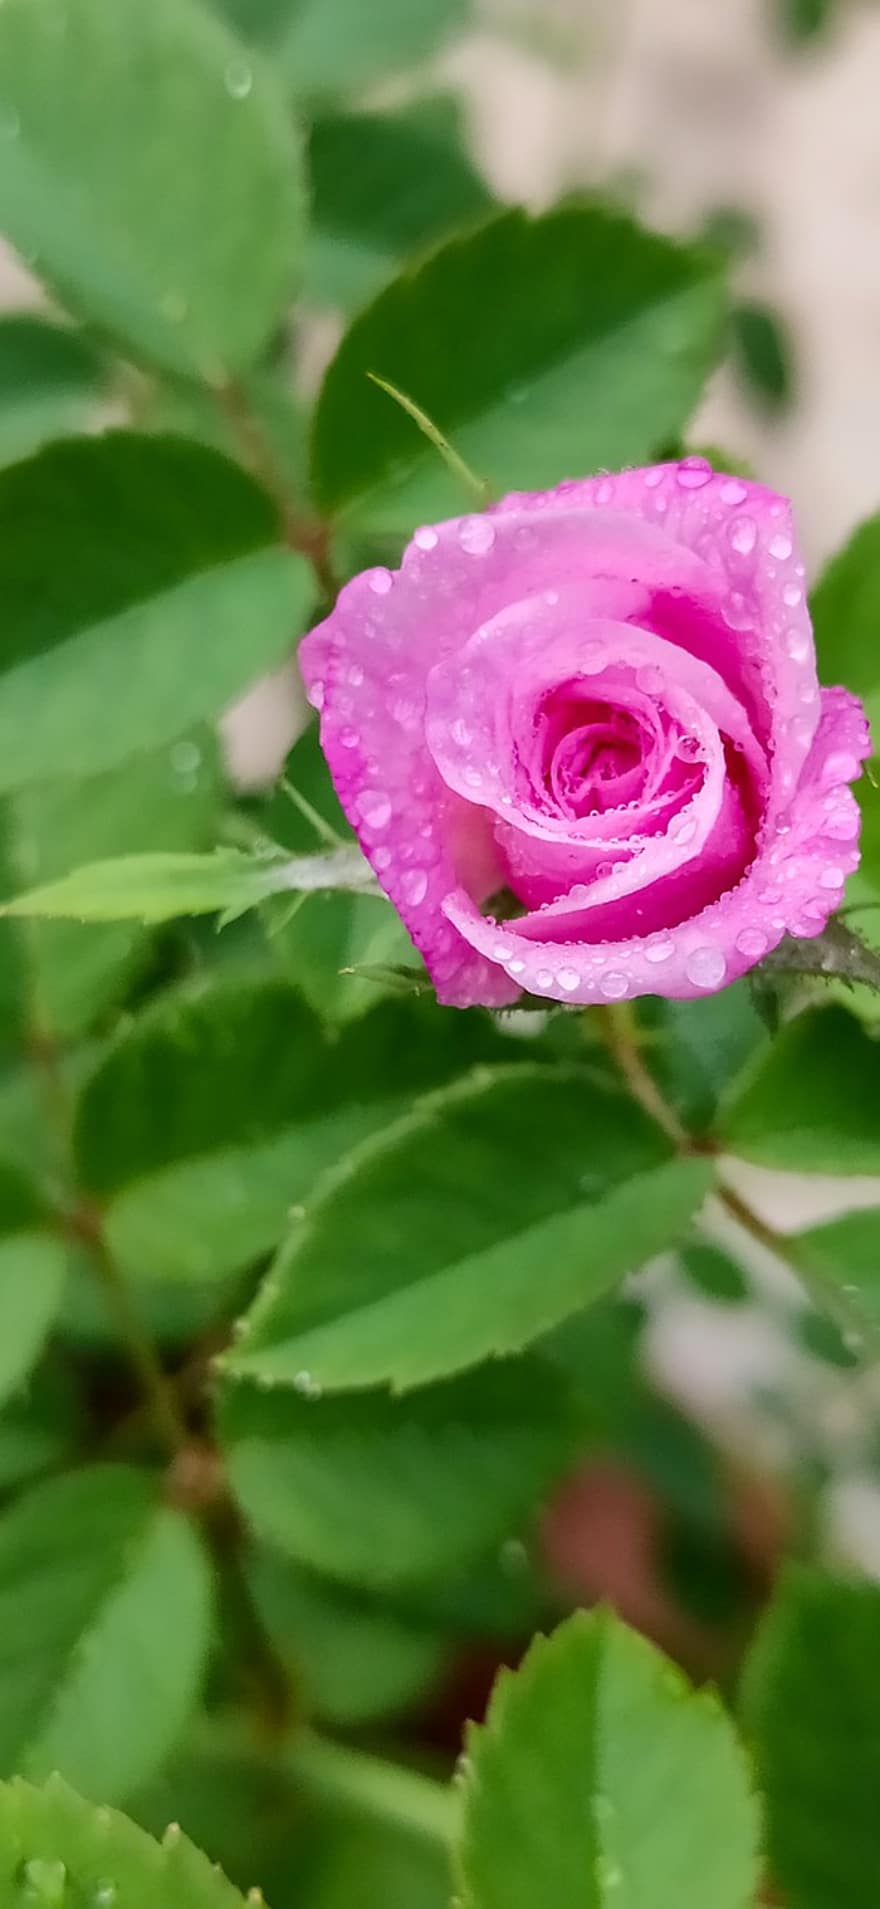 jolie petite rose, juste rose, vrai rose, rose rose, Rose, la nature, rose, fleur, plante, décoratif, jardin